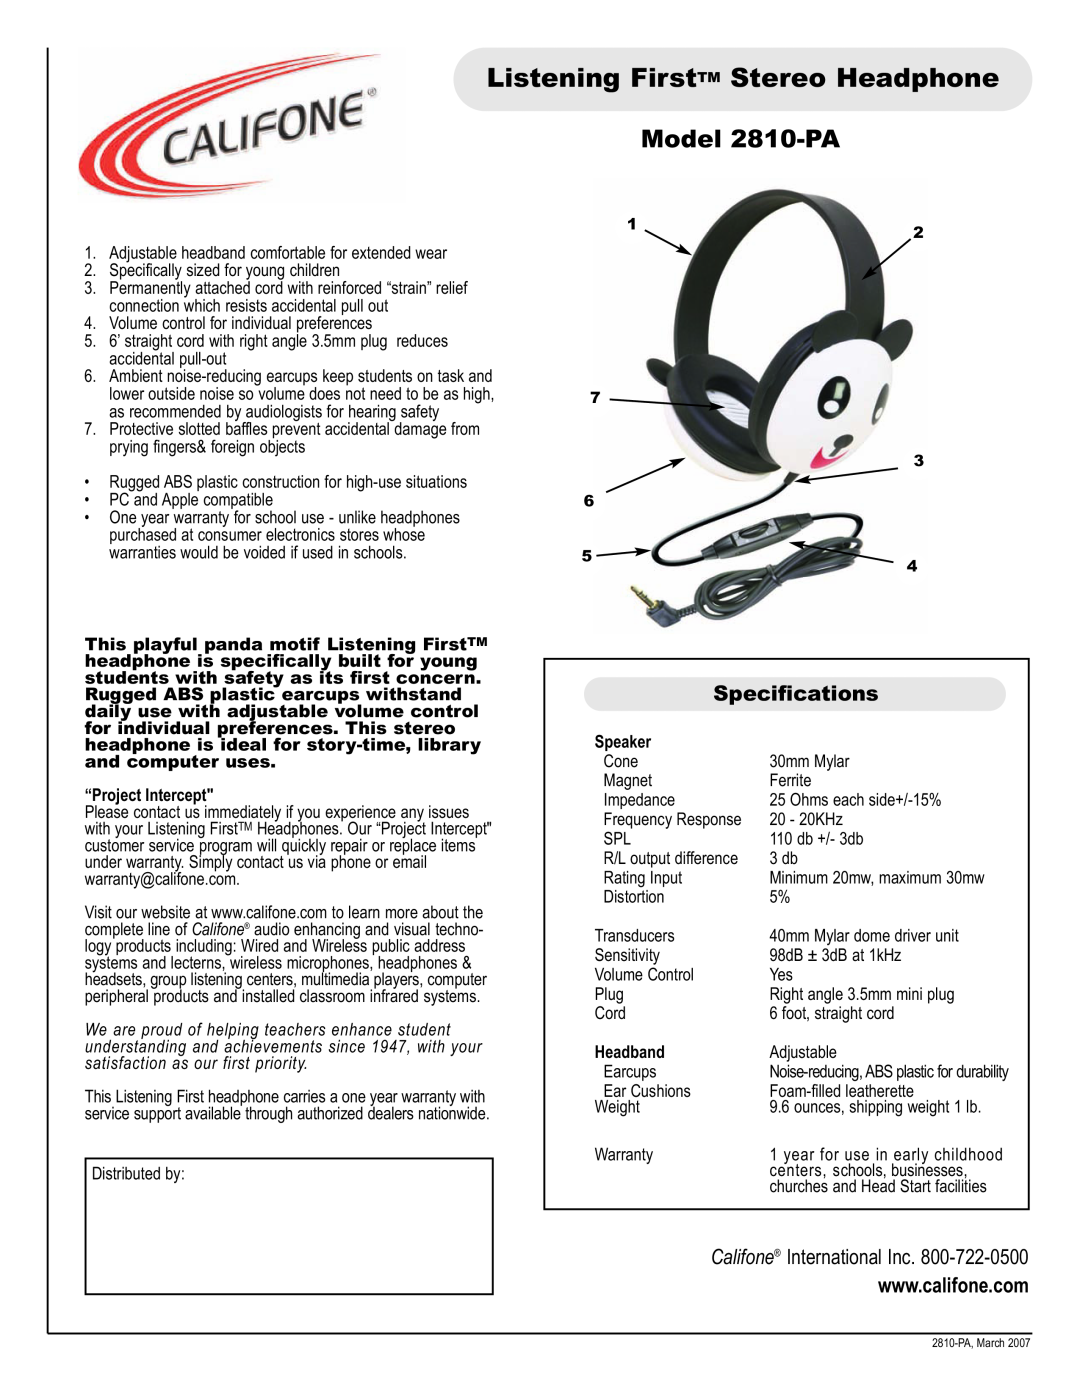 Califone specifications Listening FirstTM Stereo Headphone, Model 2810-PA, Specifications, Califone International Inc 